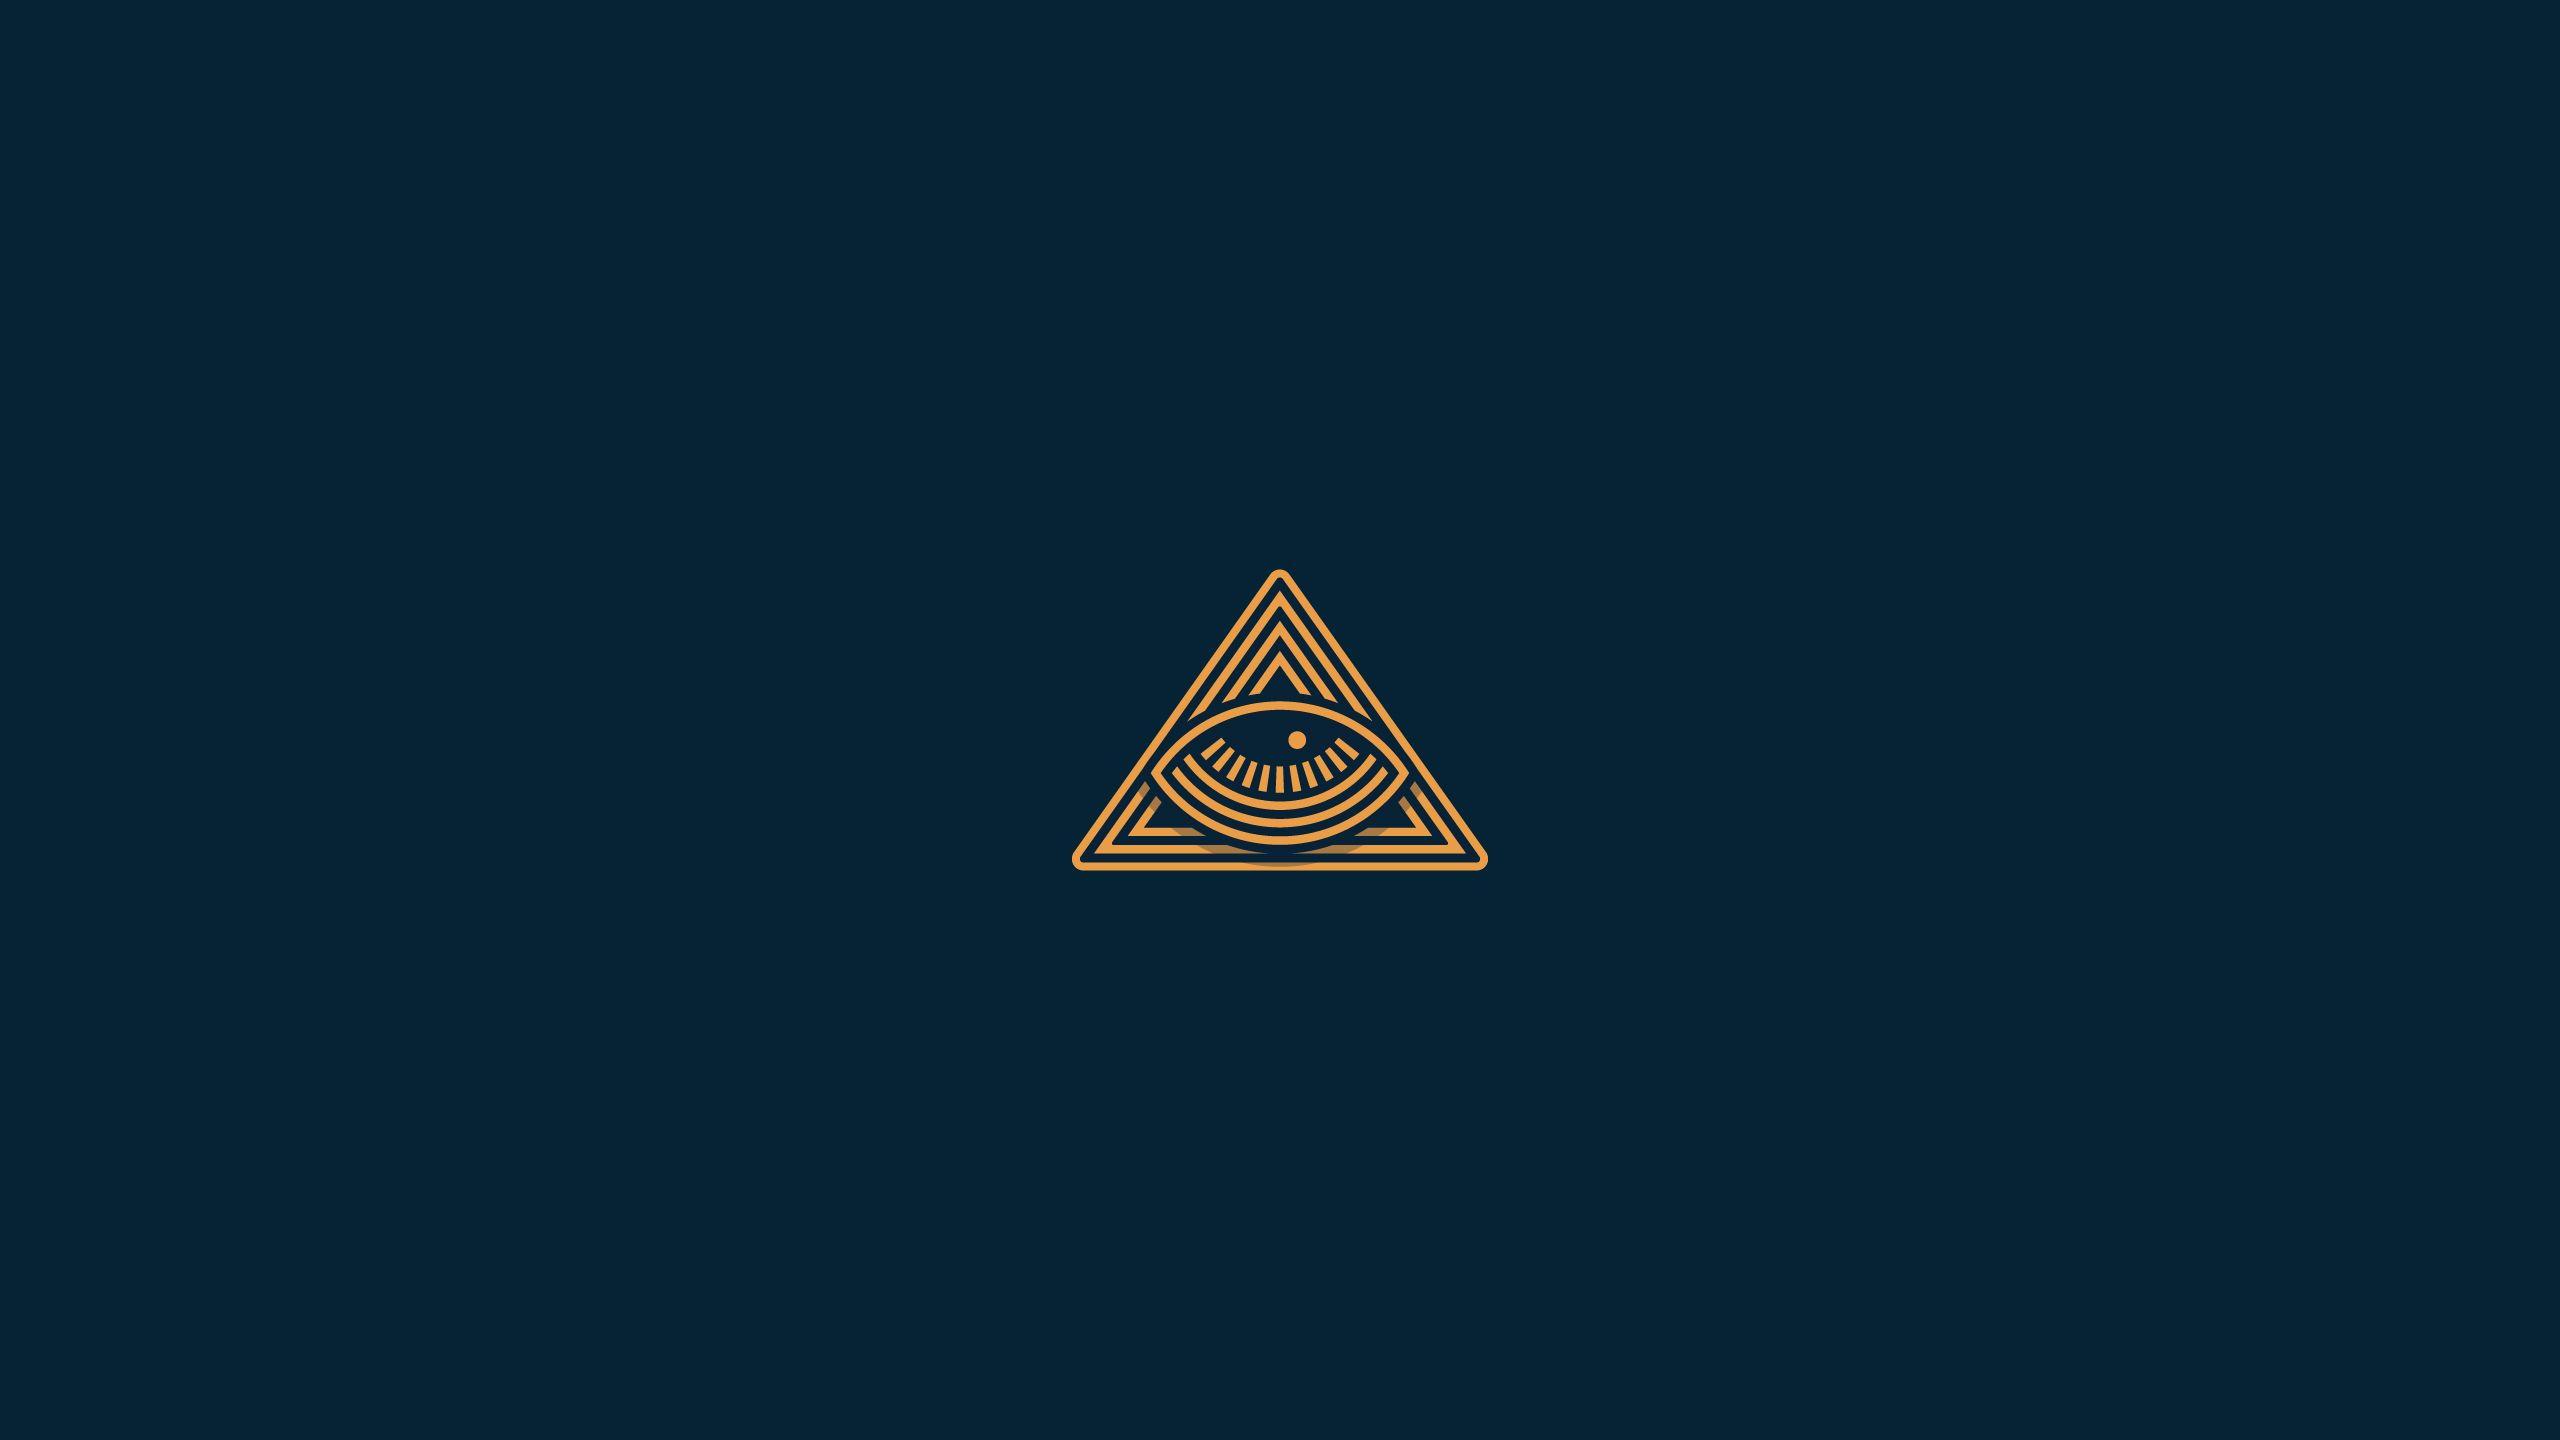 Wallpaper, graphic design, blue background, Illuminati, pyramid